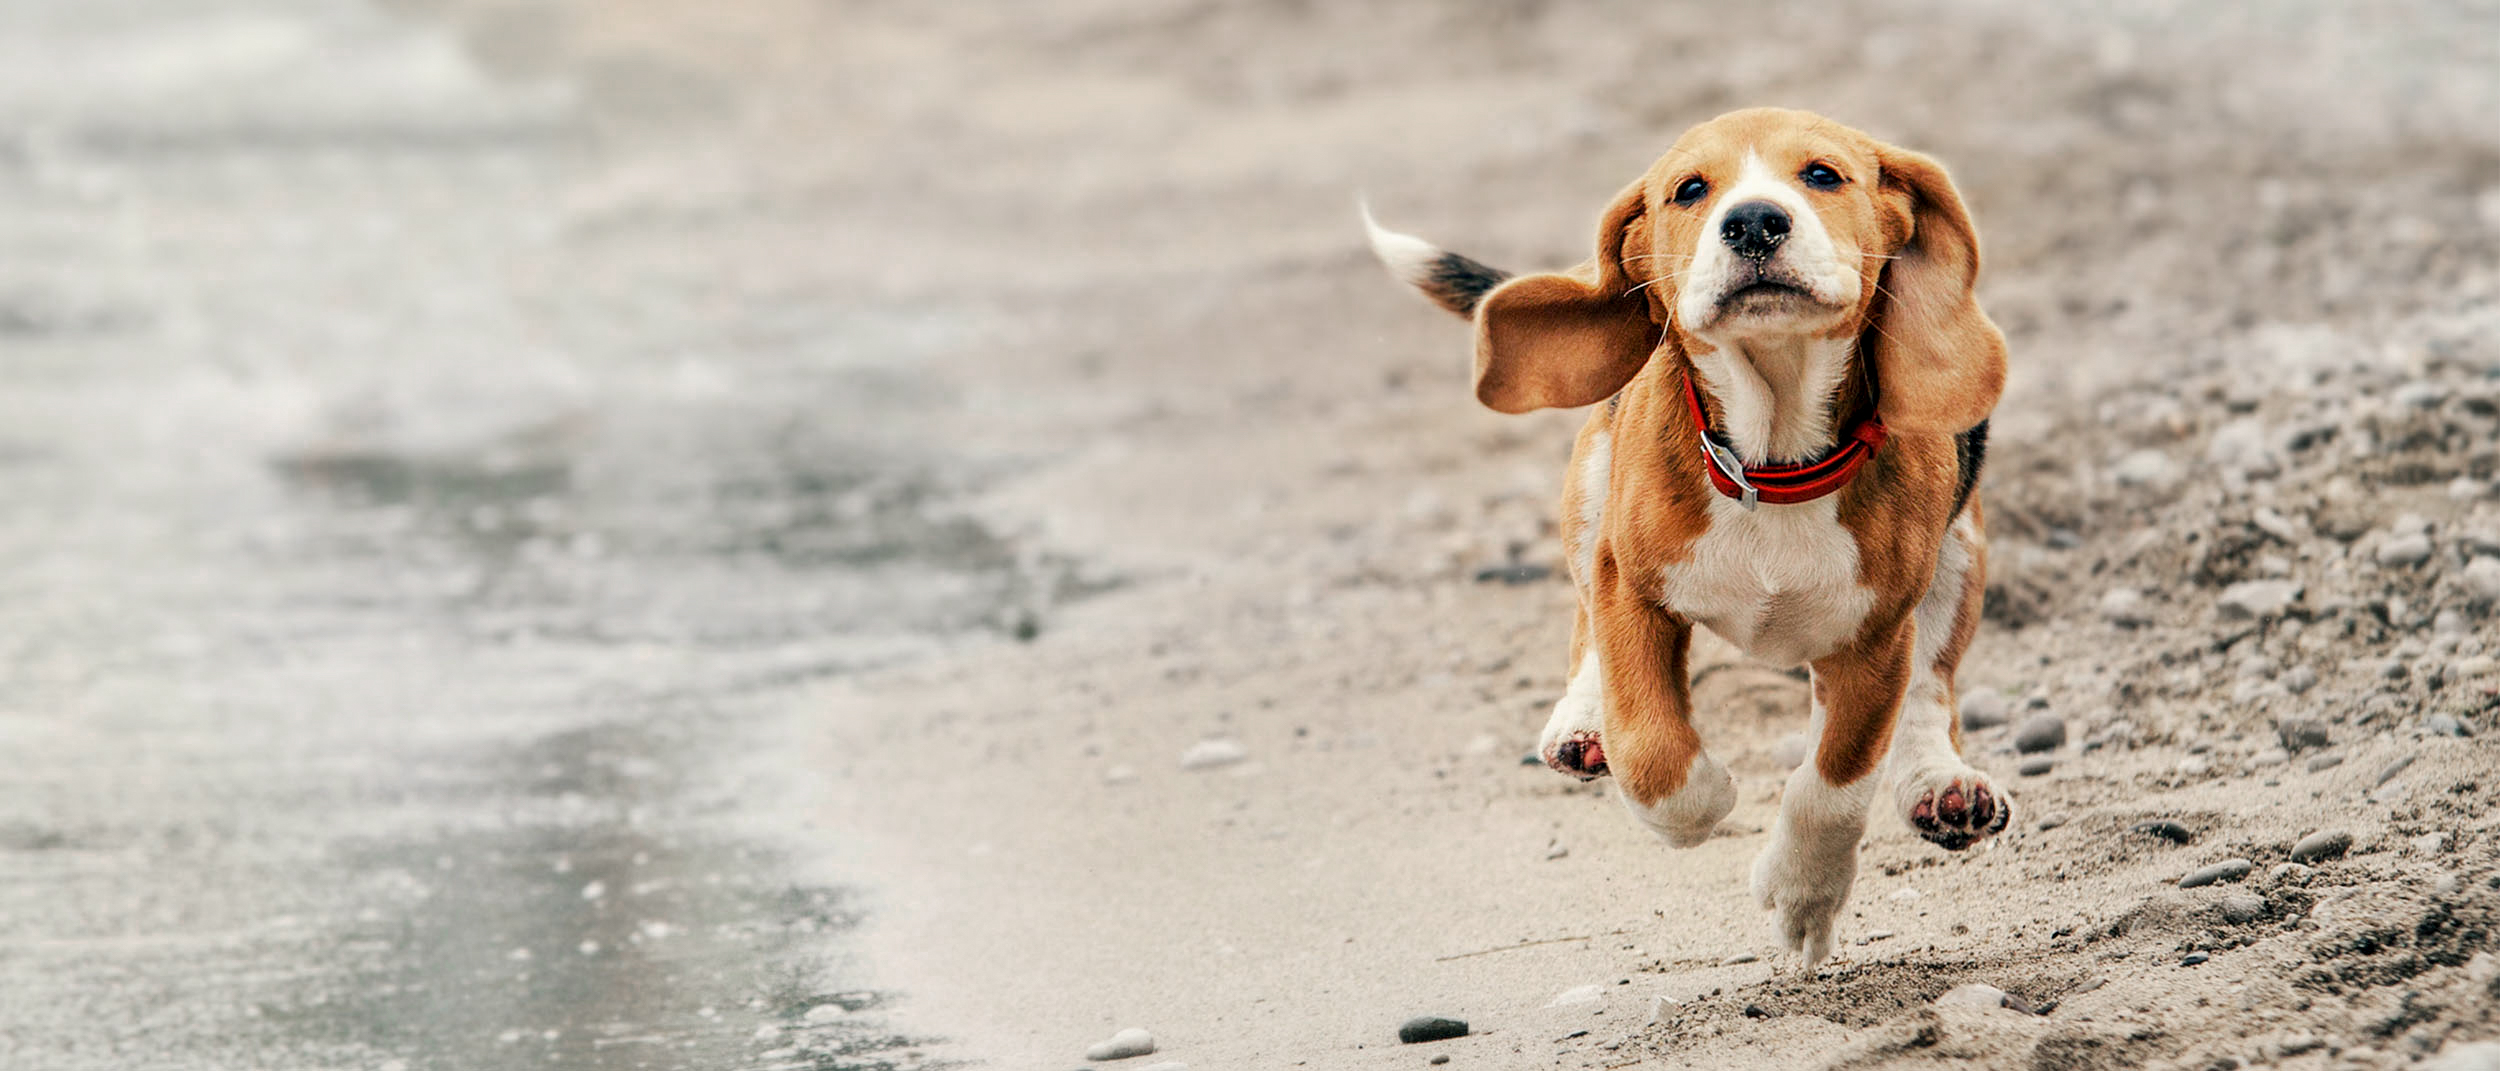 Puppy Beagle running on a sandy beach.